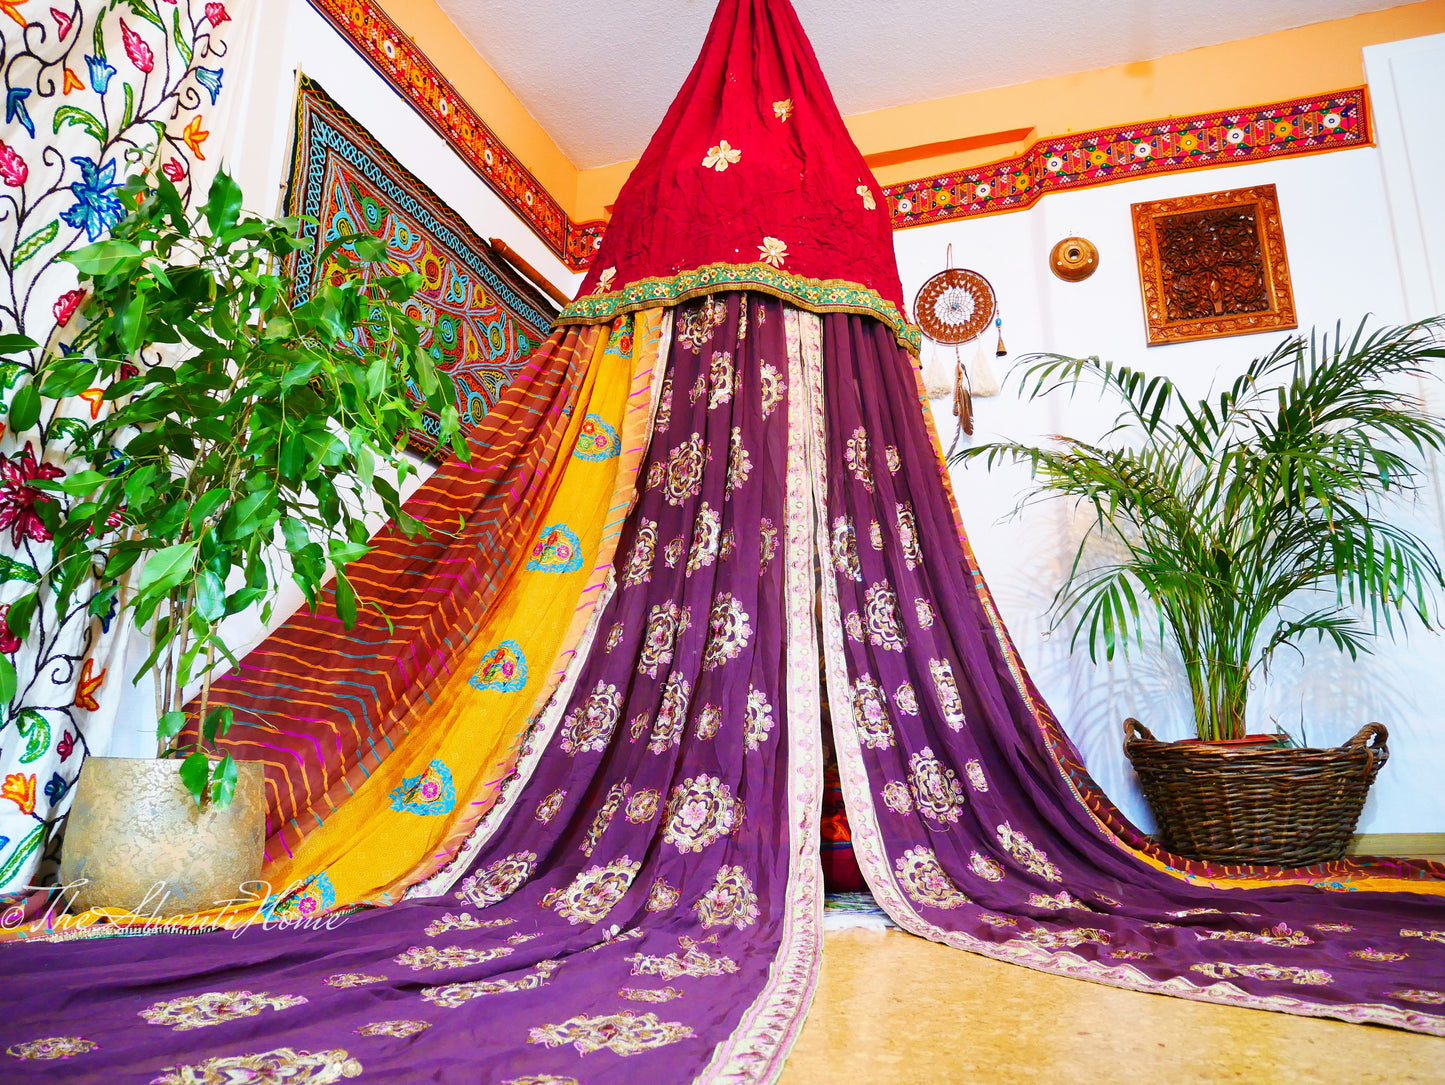 Saree tent - Indian canopy - boho bed canopy  | bohemian wedding backdrop - Hippie decor - floor seating area | meditation room - Shanti baldachin